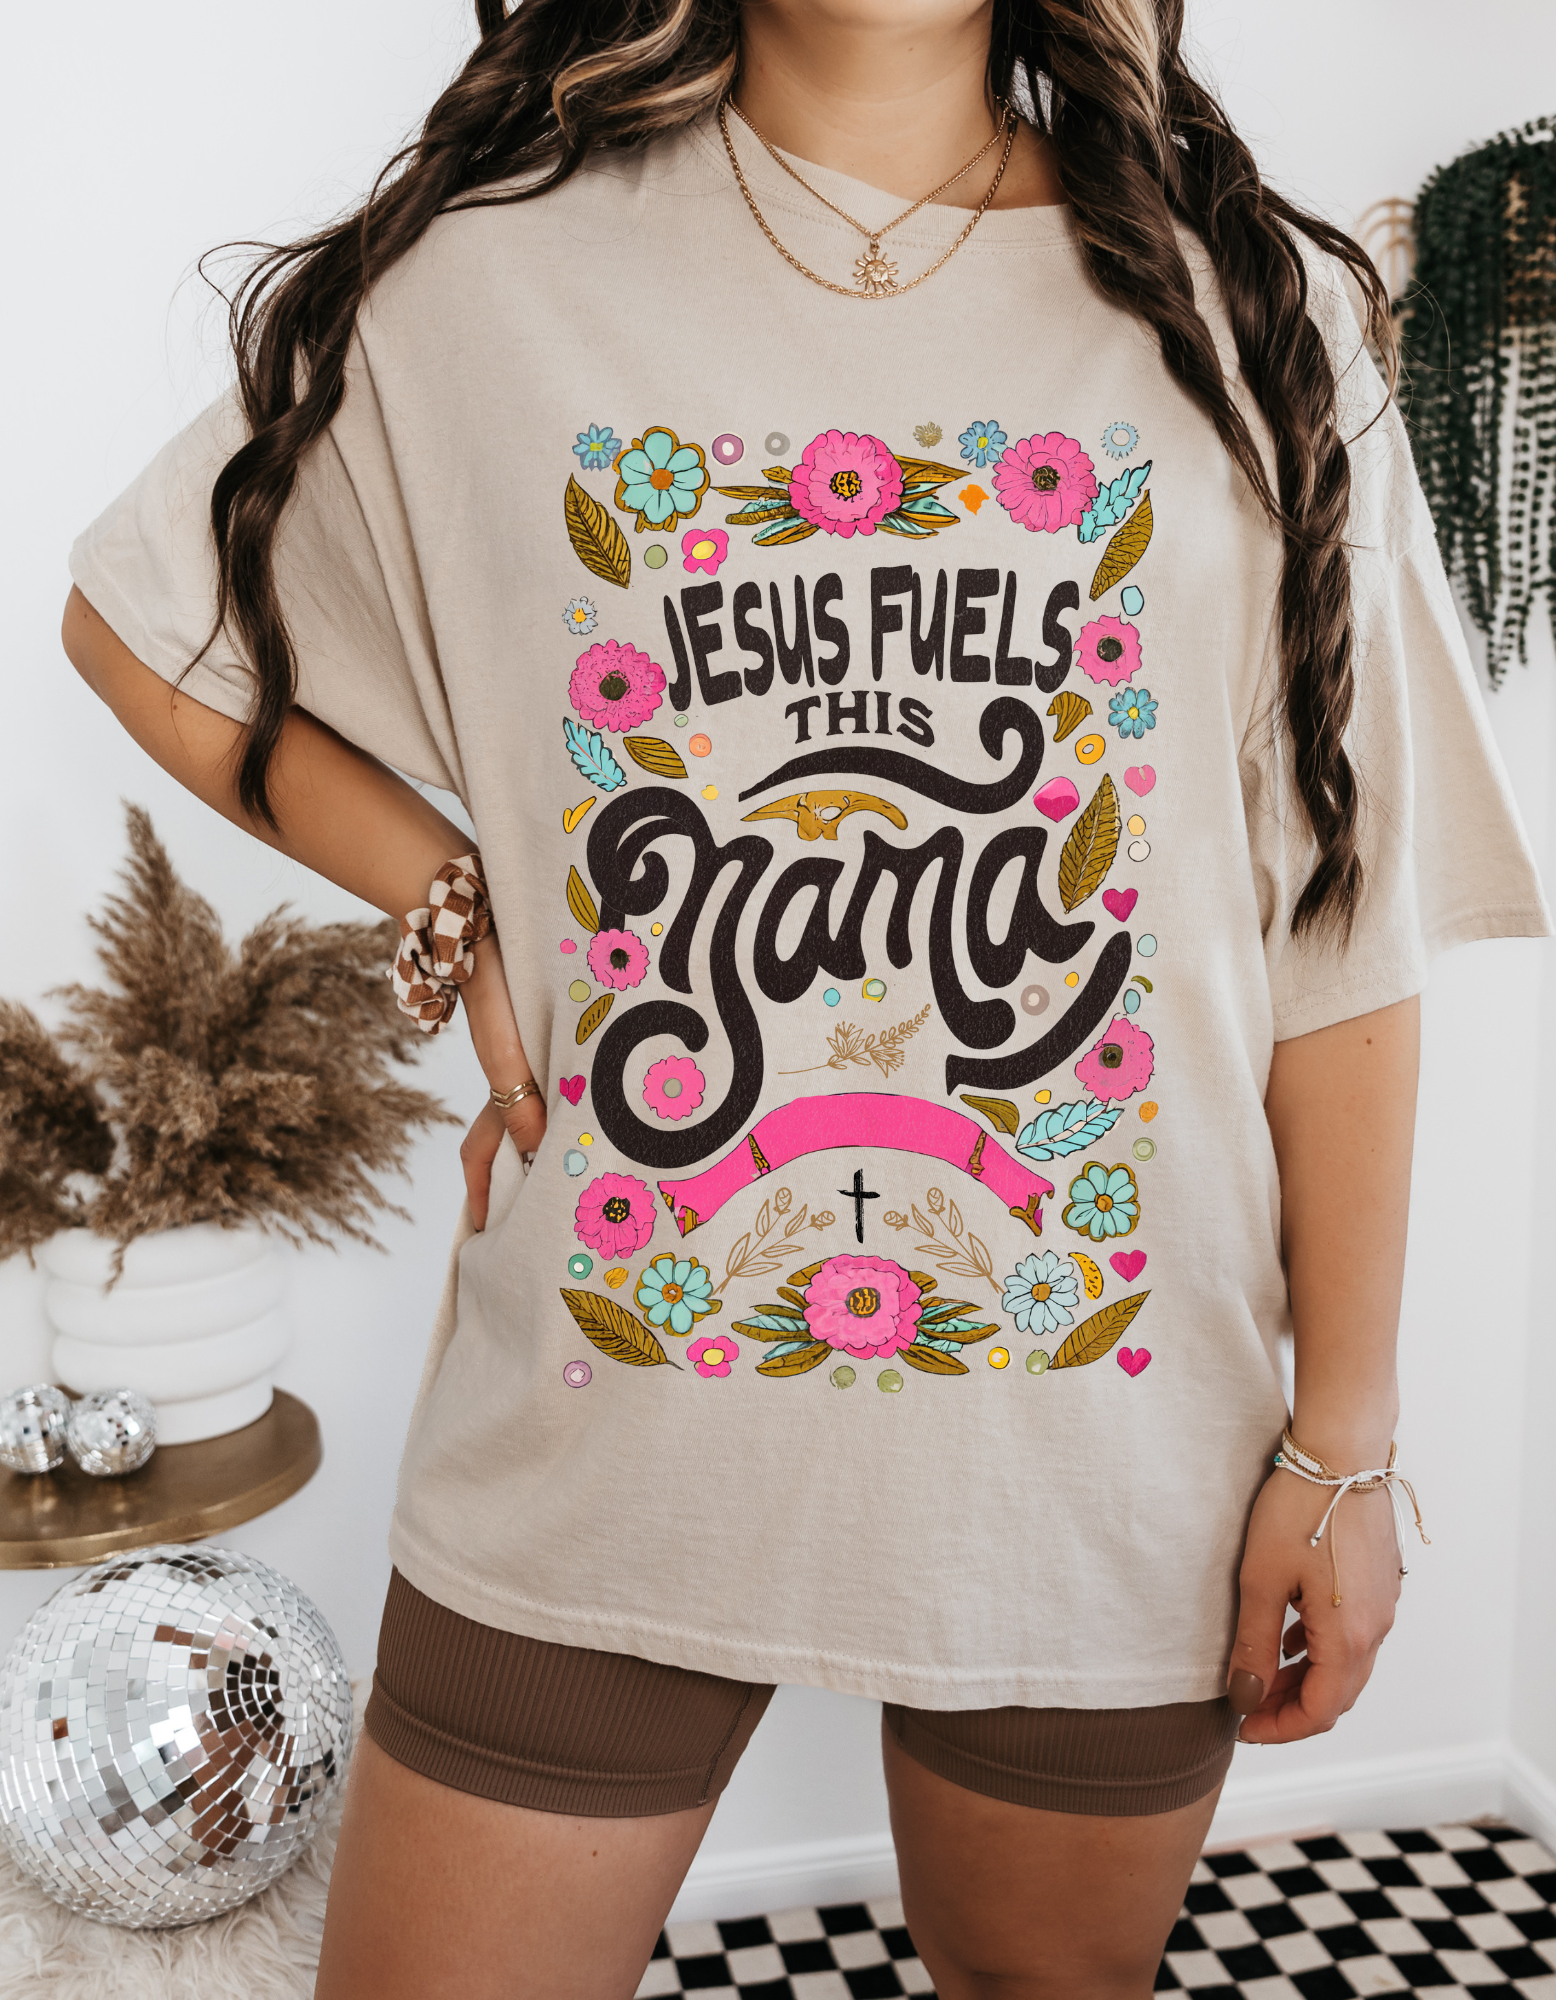 Jesus Fuels This Mama Graphic T-Shirt